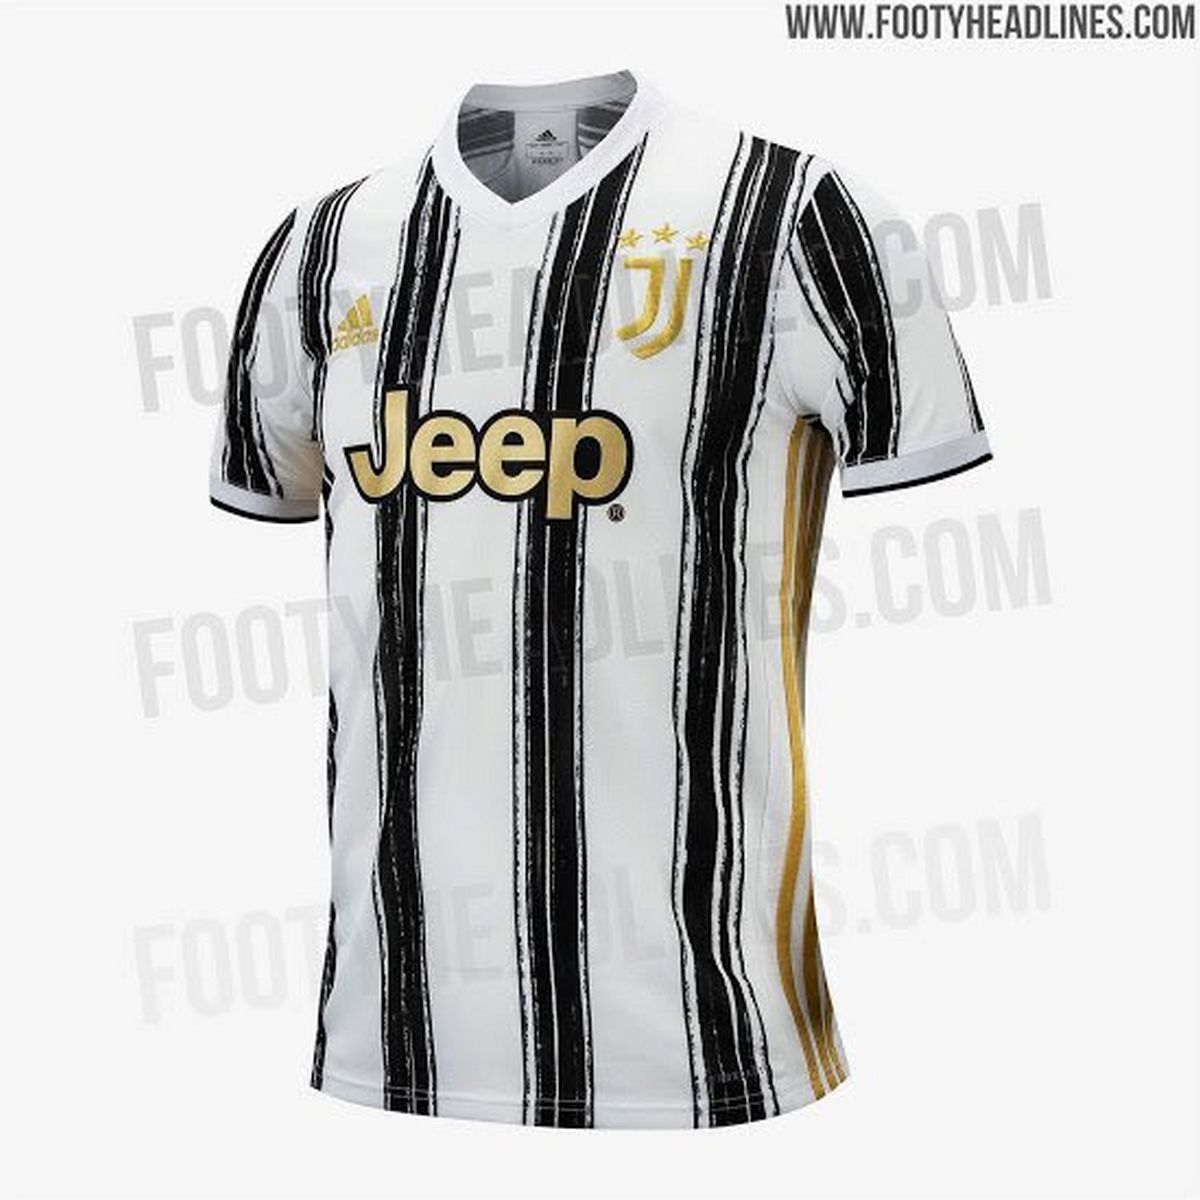 Maglia Juventus 2020-2021: le prime foto rubate